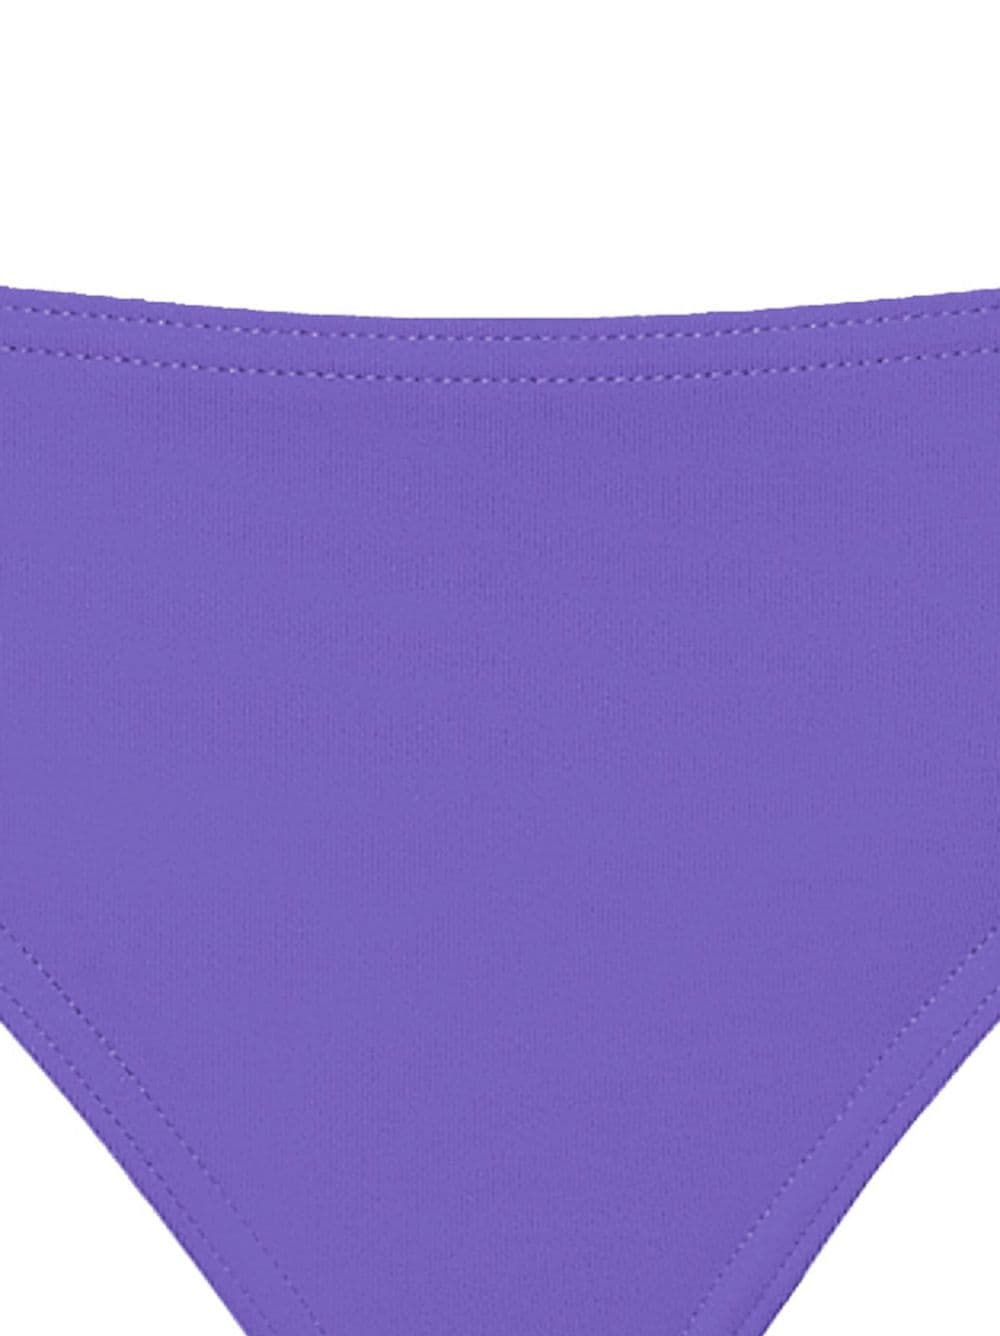 Fripon bikini bottoms - 2